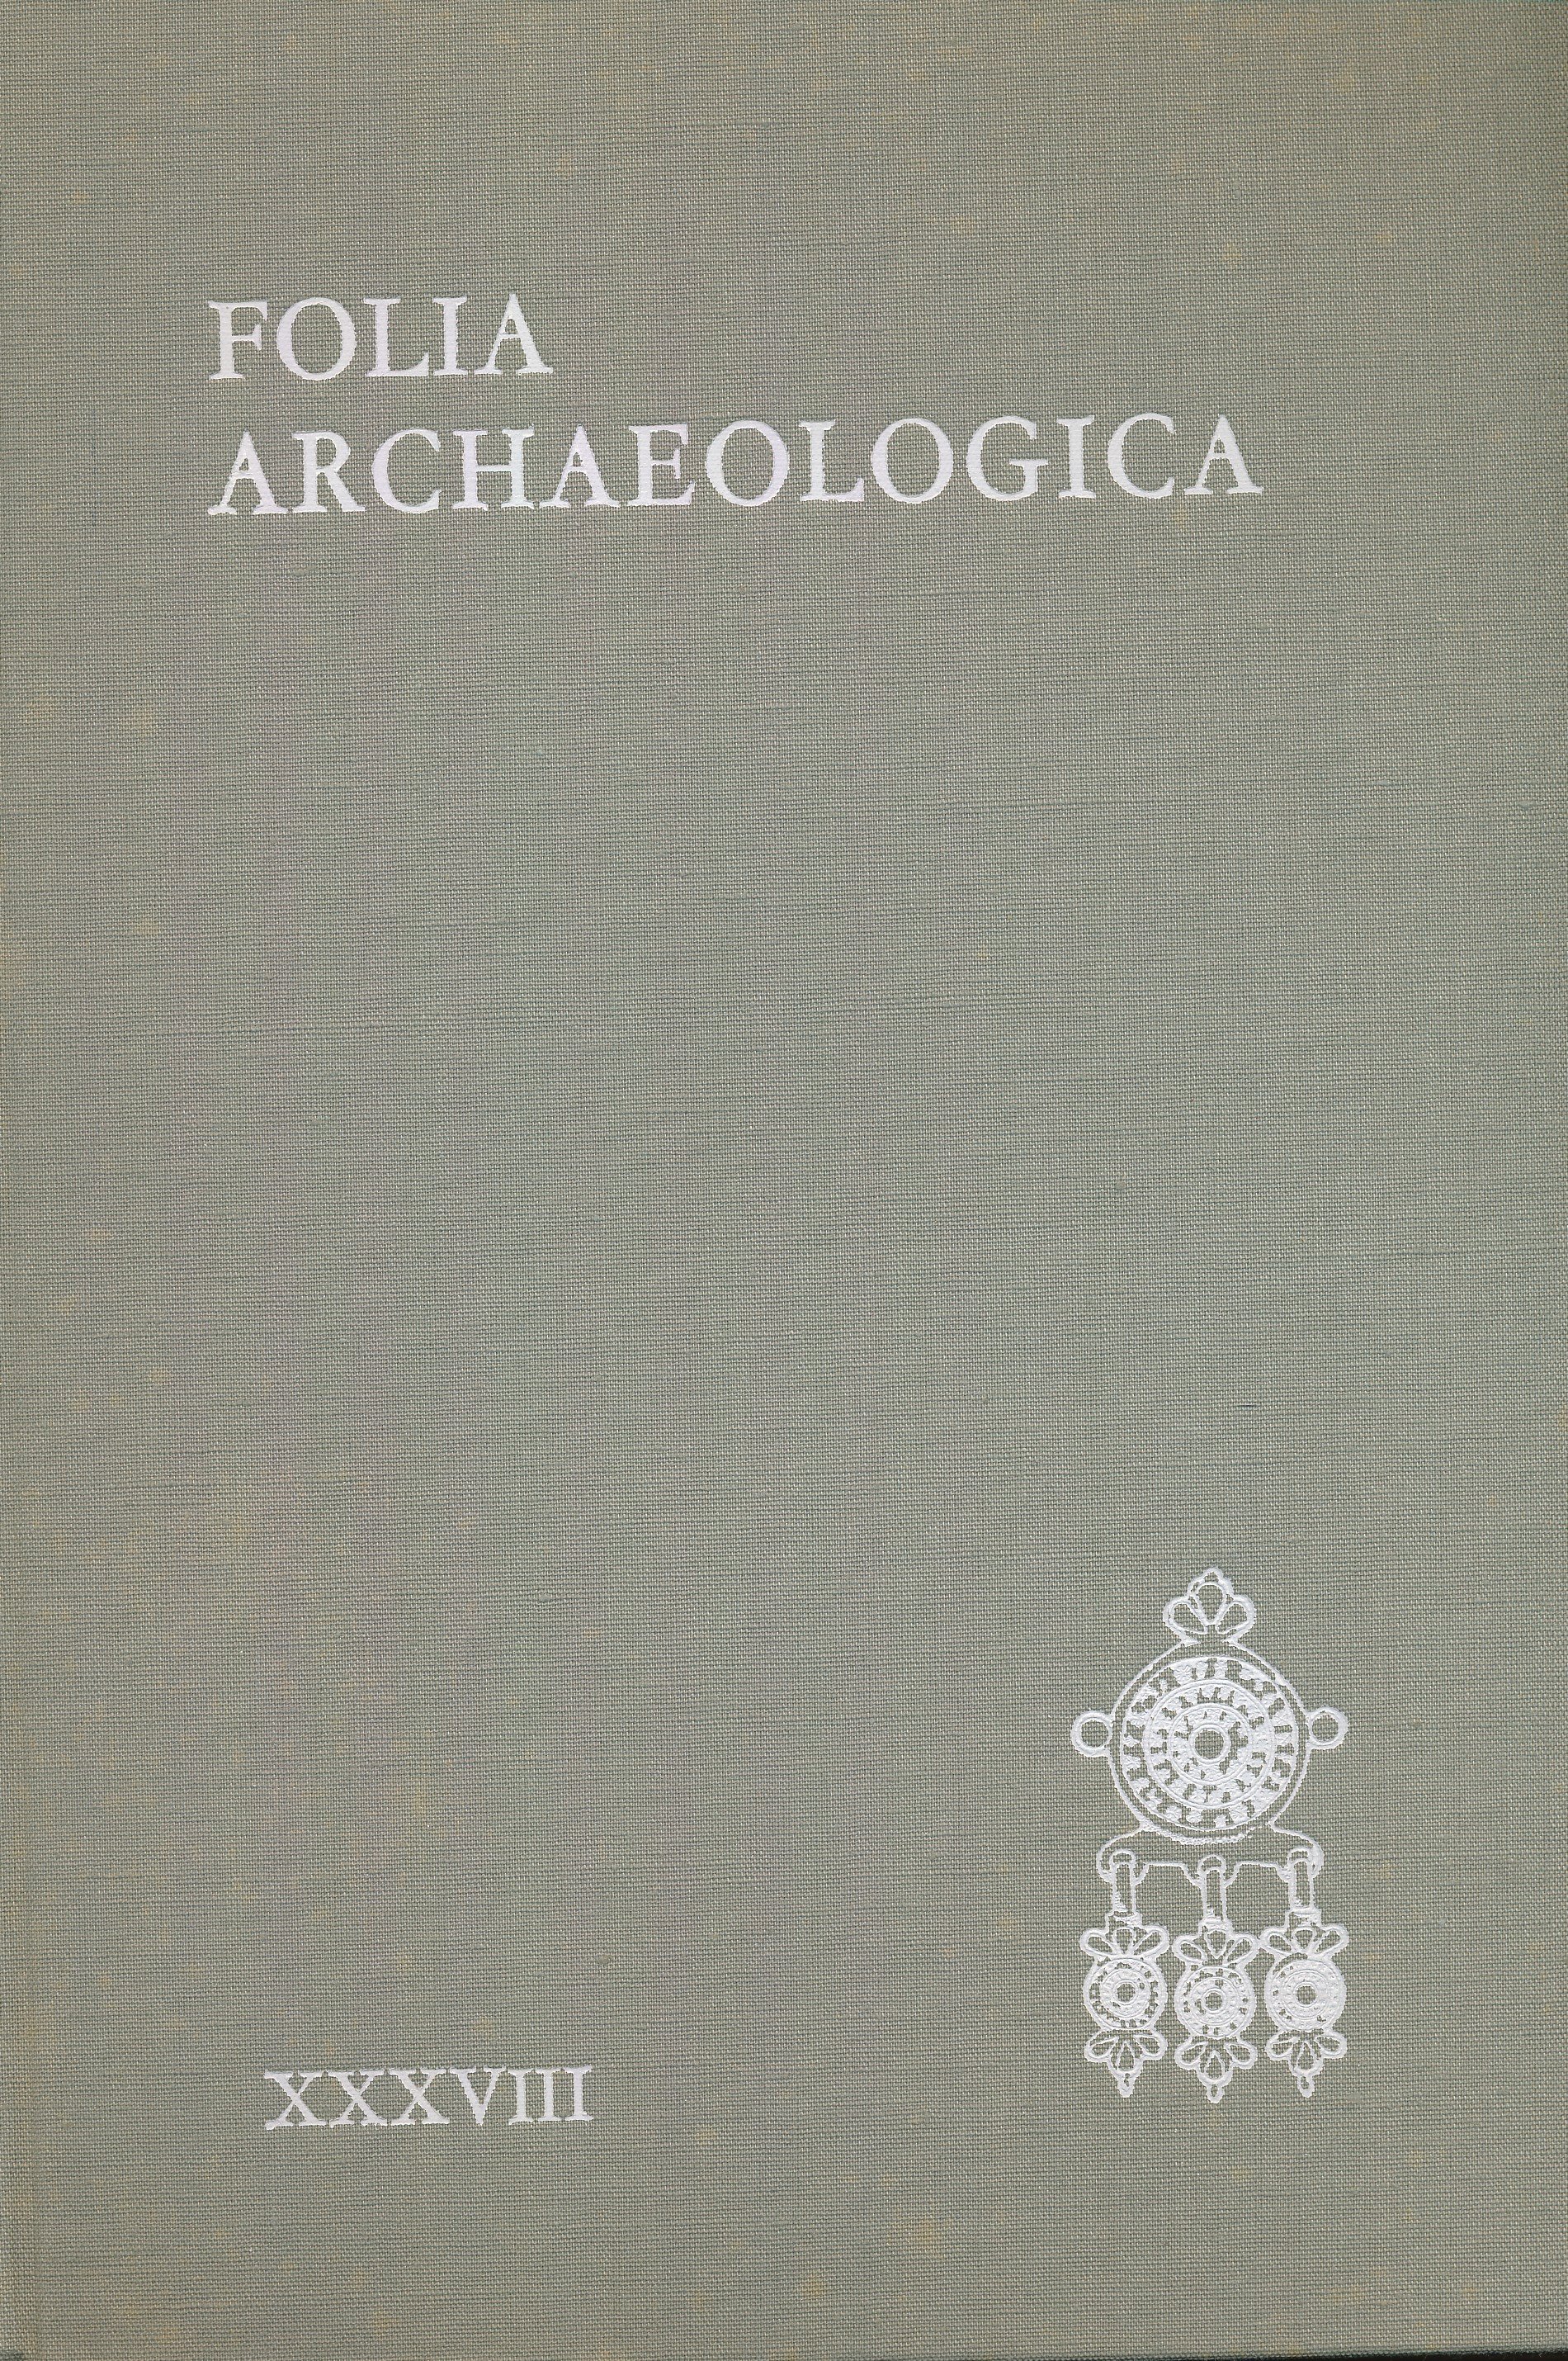 Folia archaeologica XXXVIII. (Erkel Ferenc Területi Múzeum, Gyula CC BY-NC-SA)